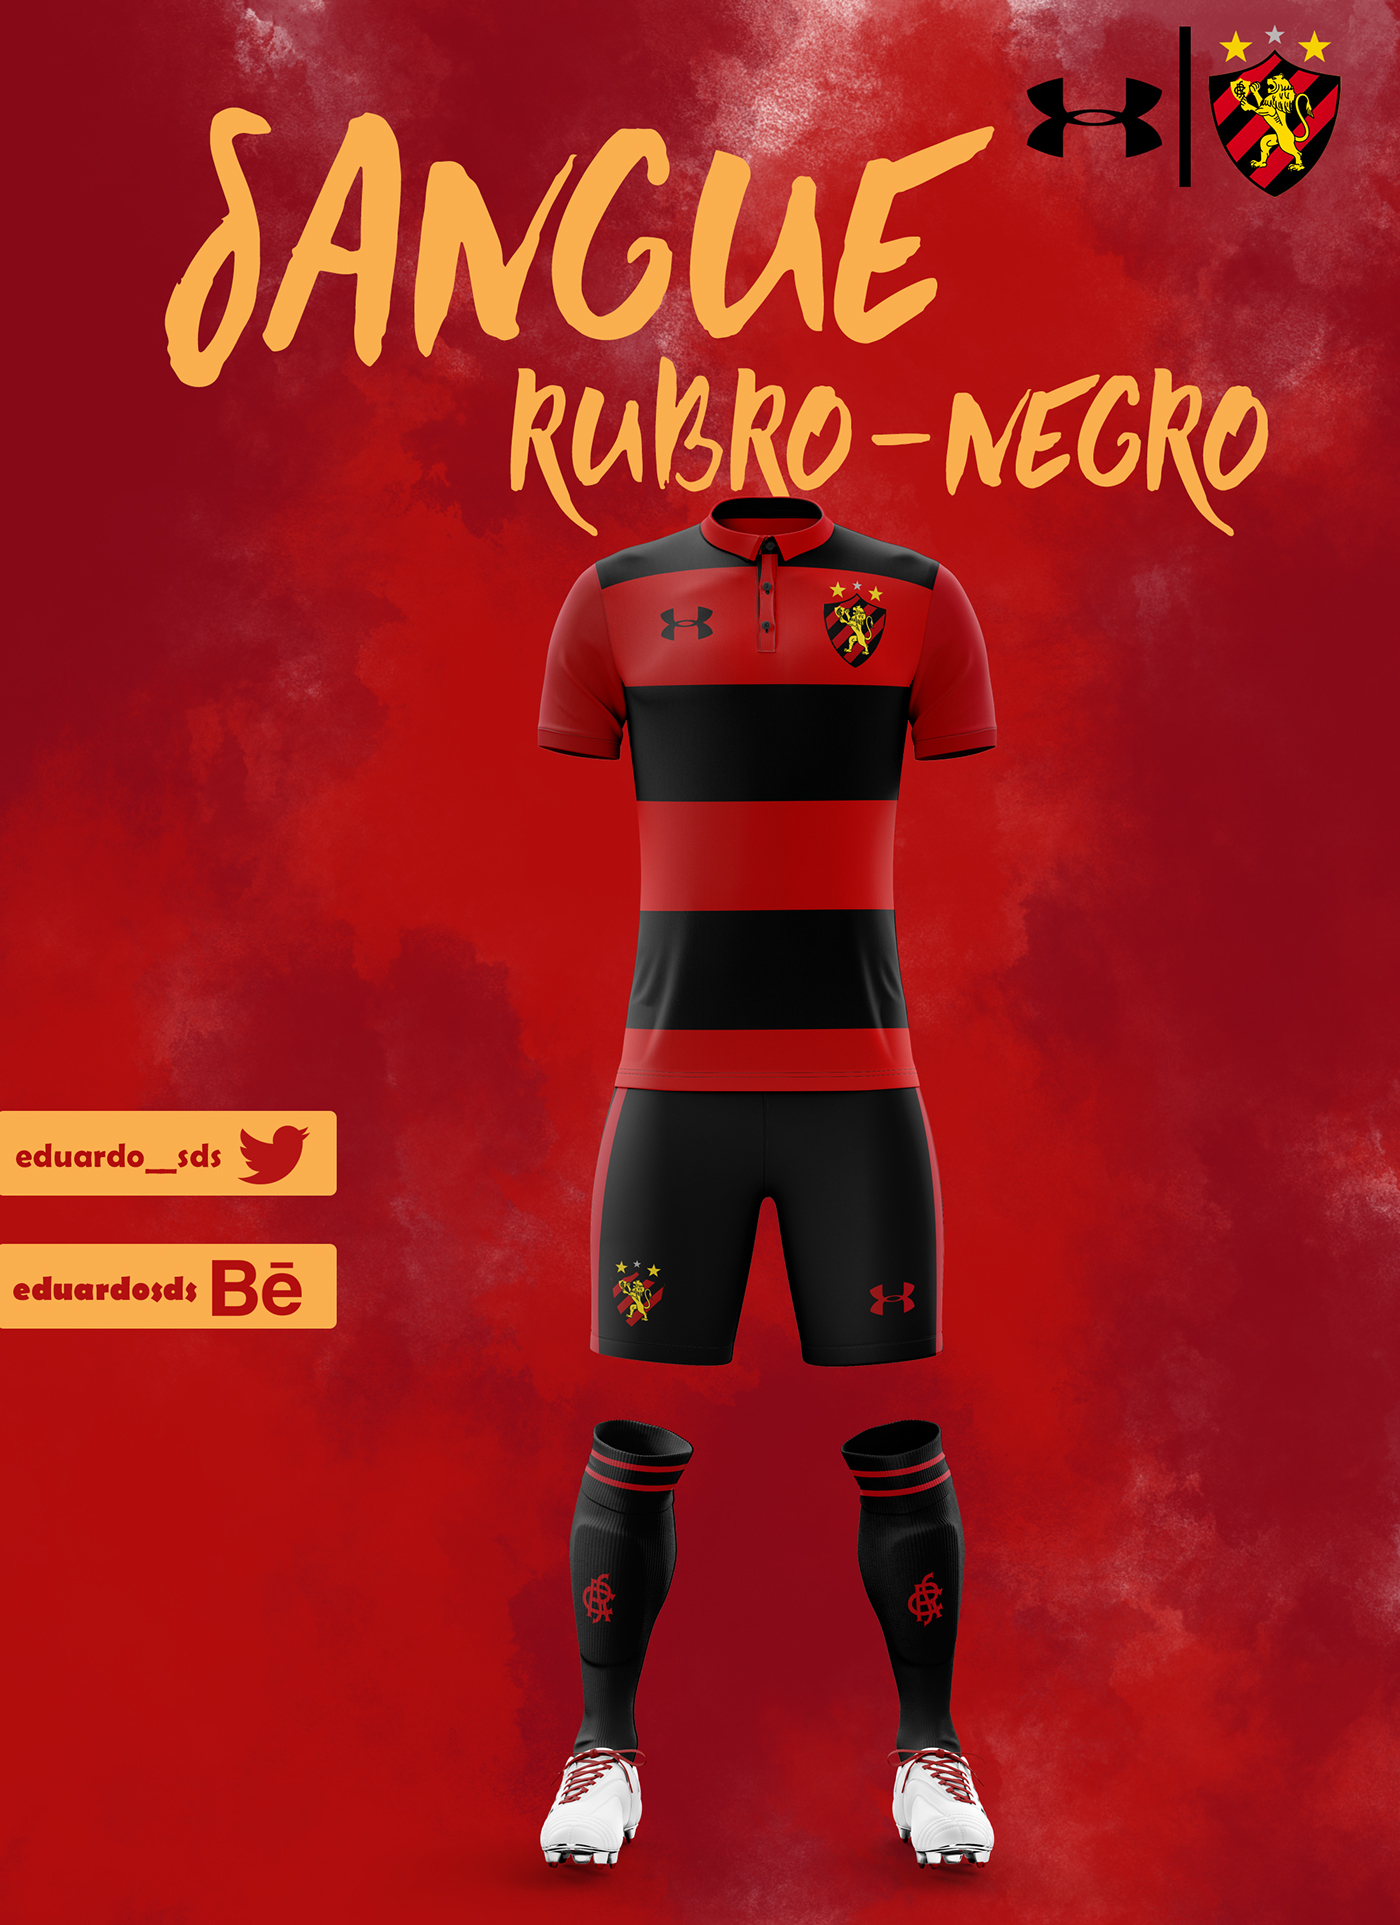 Sport Recife - Under Armour 2018 :: Behance